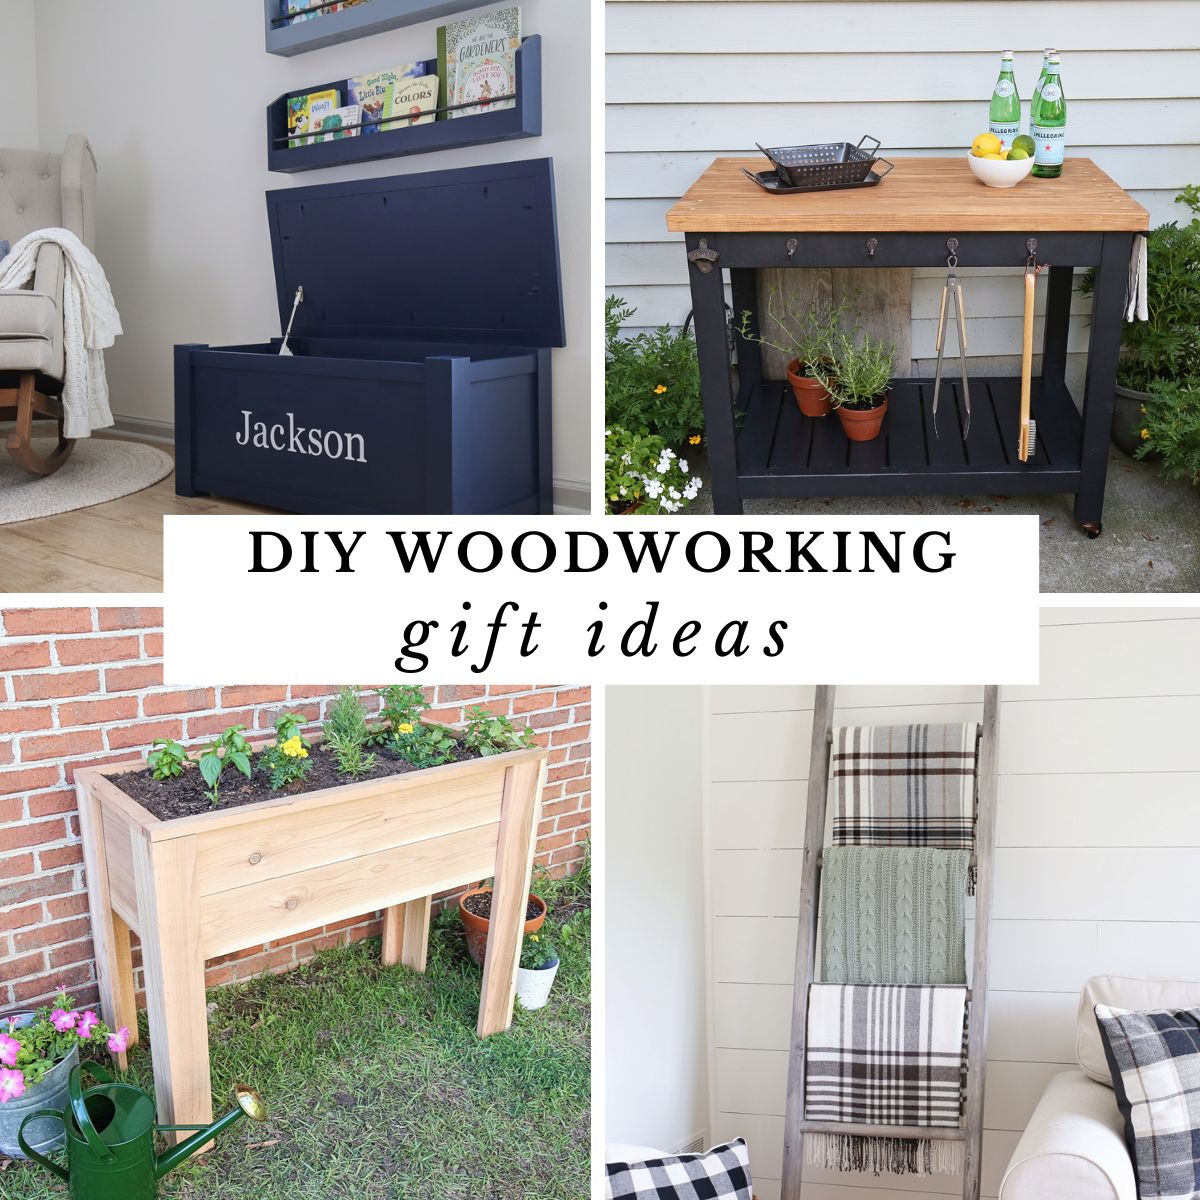 DIY Woodworking Gift Ideas Blog Post Thumbnail